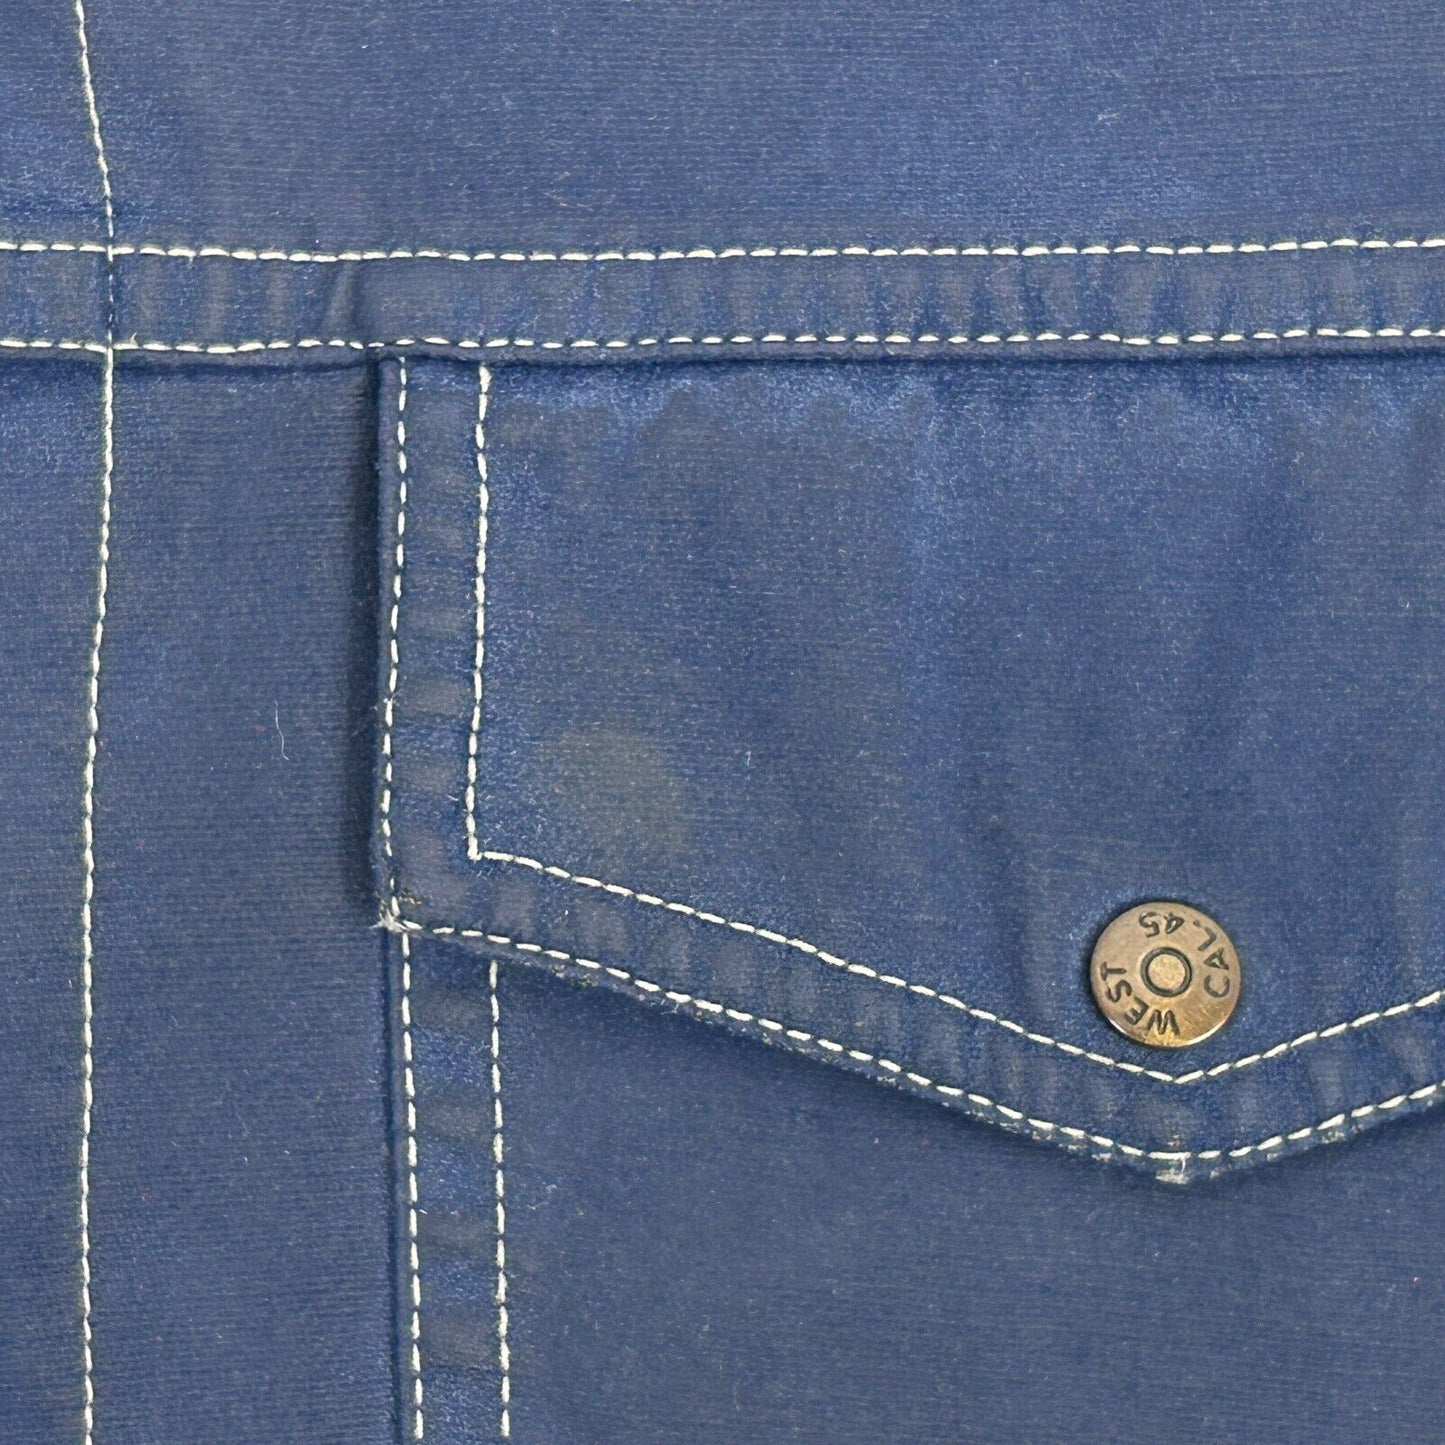 Mr Witt Vintage 60s 70s Shirt Jacket Blue Rockabilly Western Shacket Large